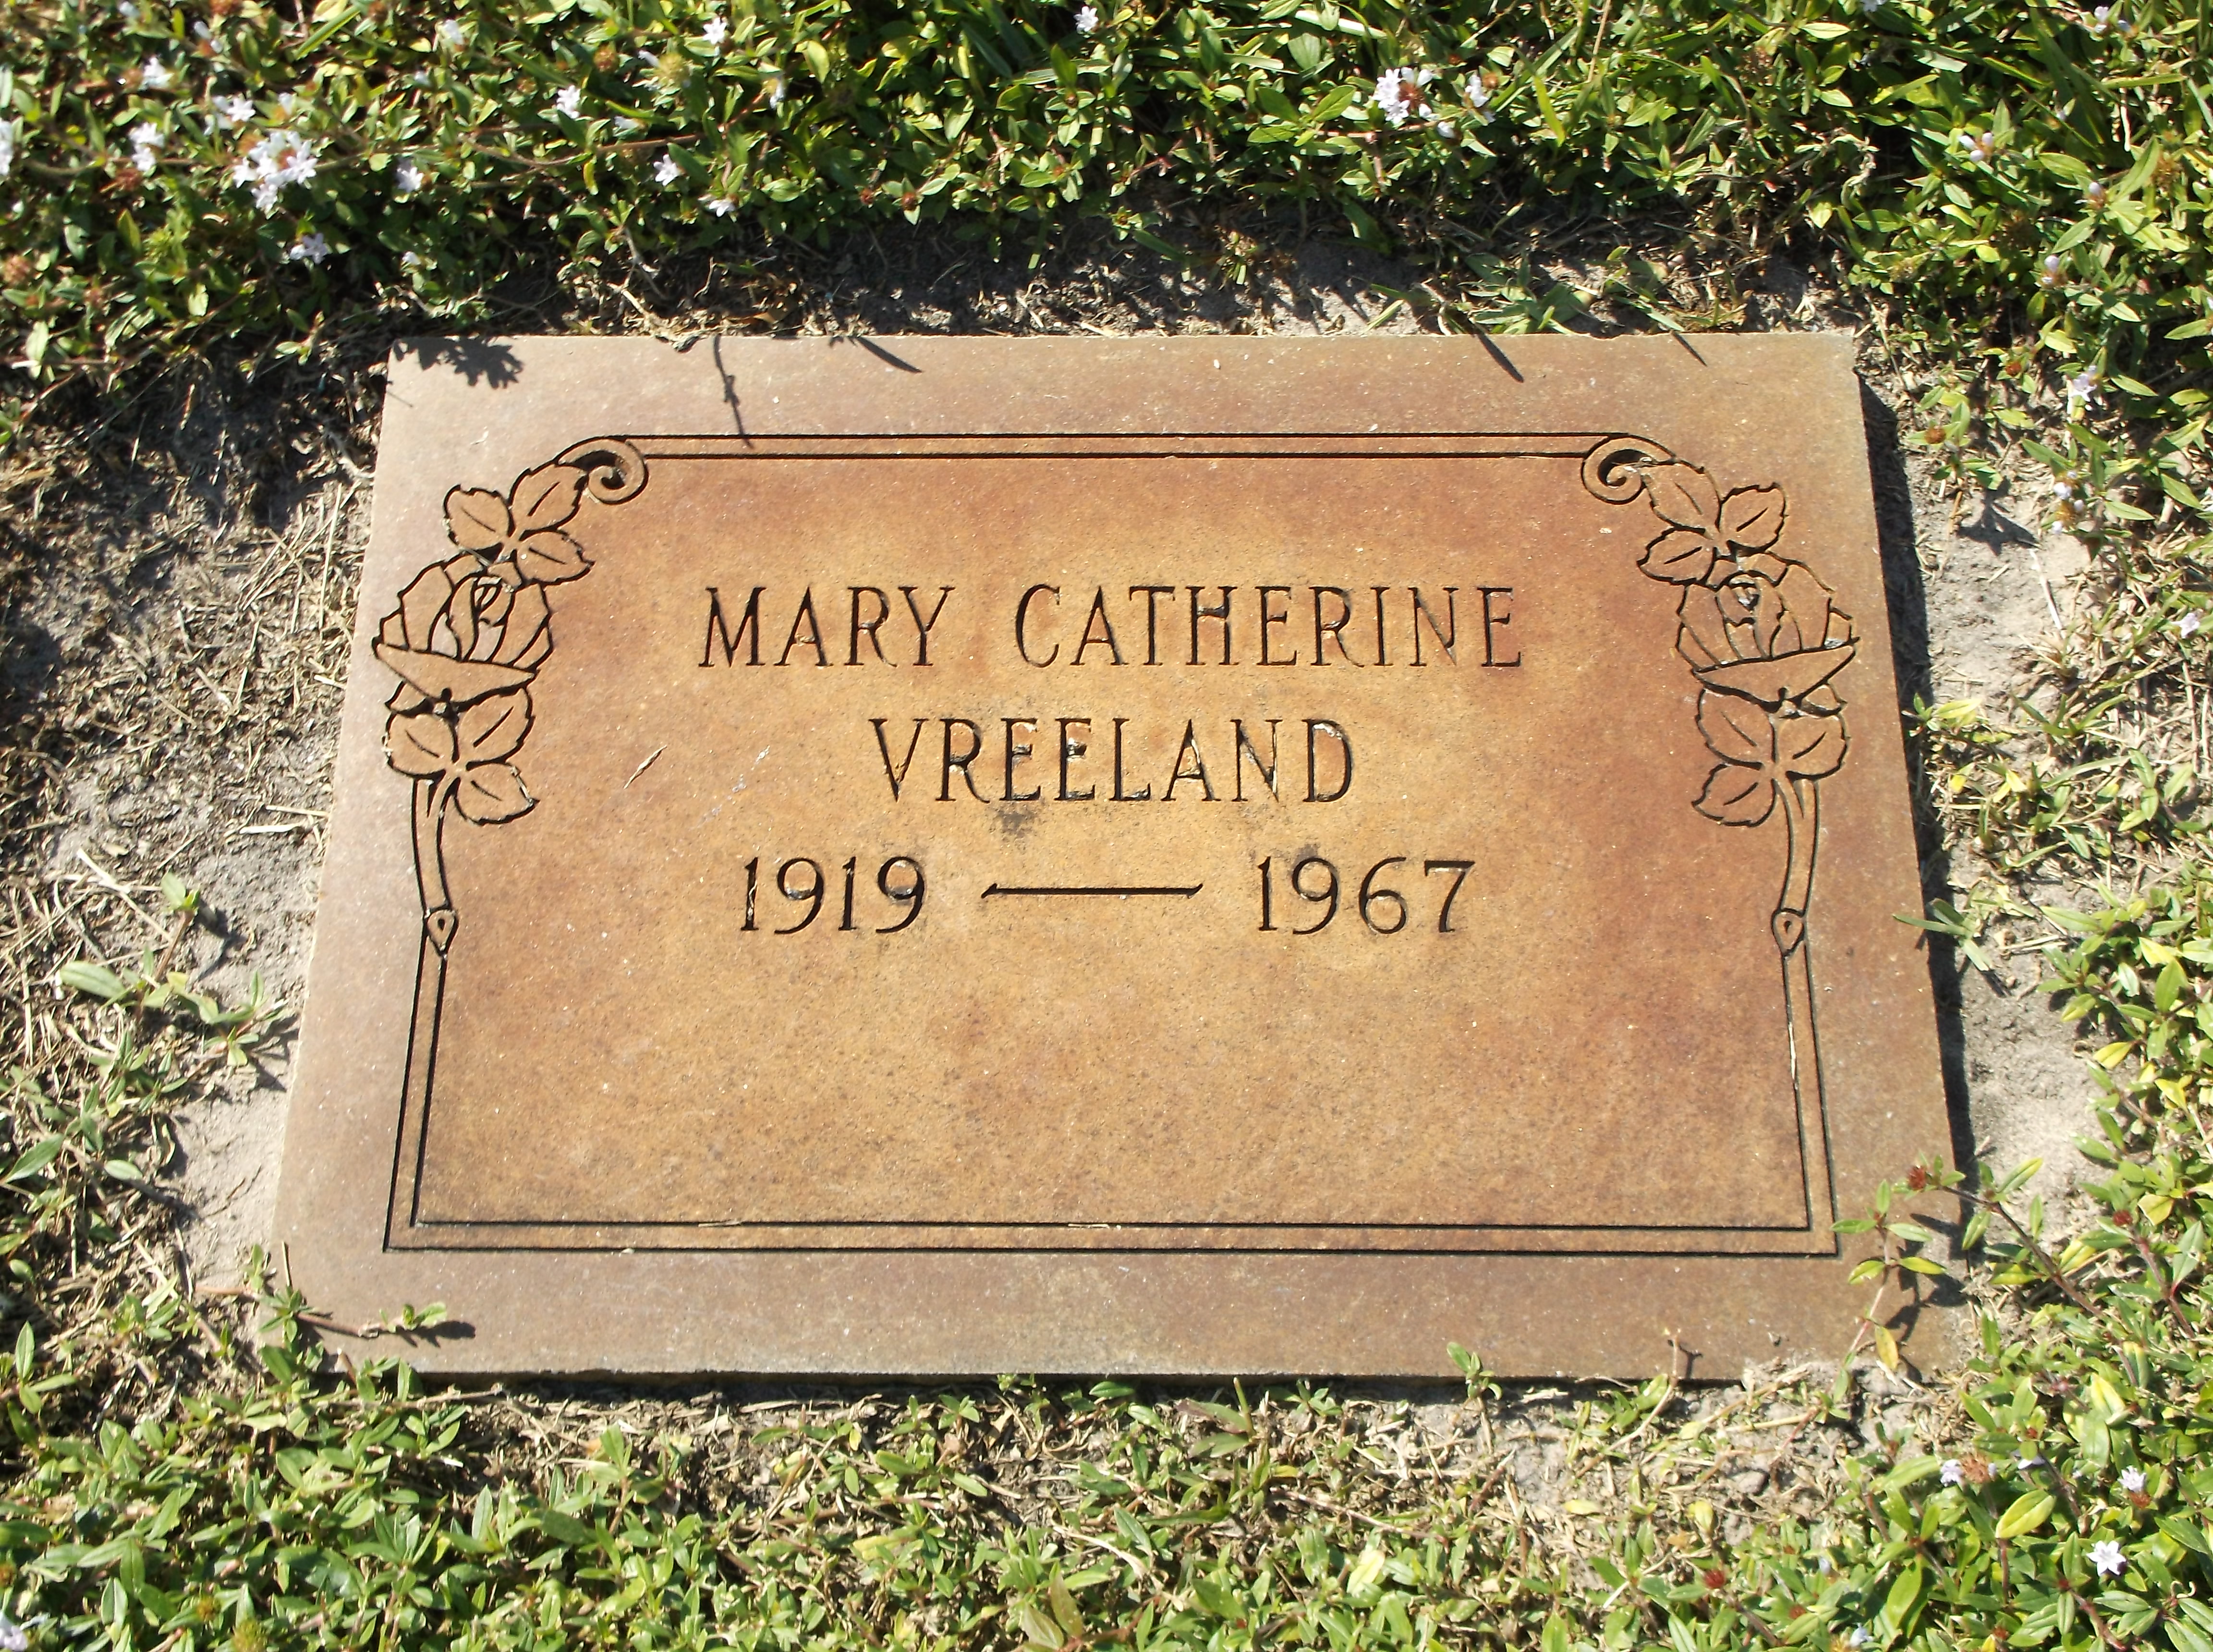 Mary Catherine Vreeland